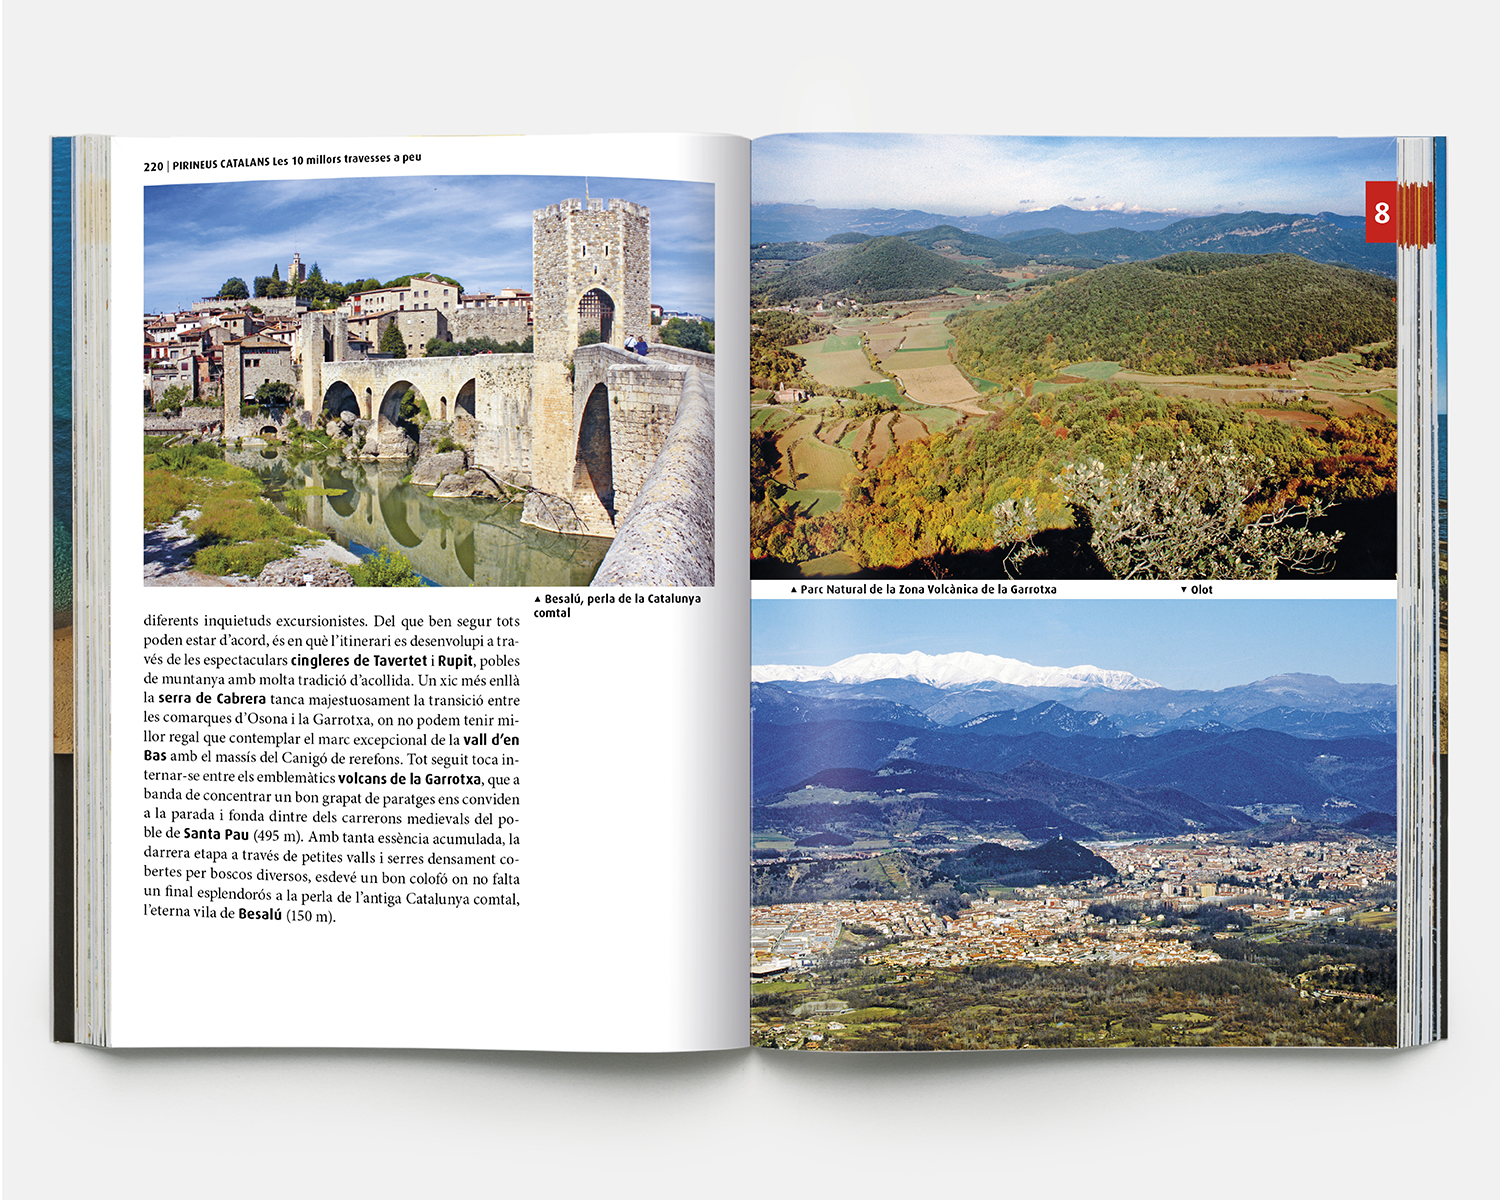 Pyrenees of Girona - Costa Brava gn 10